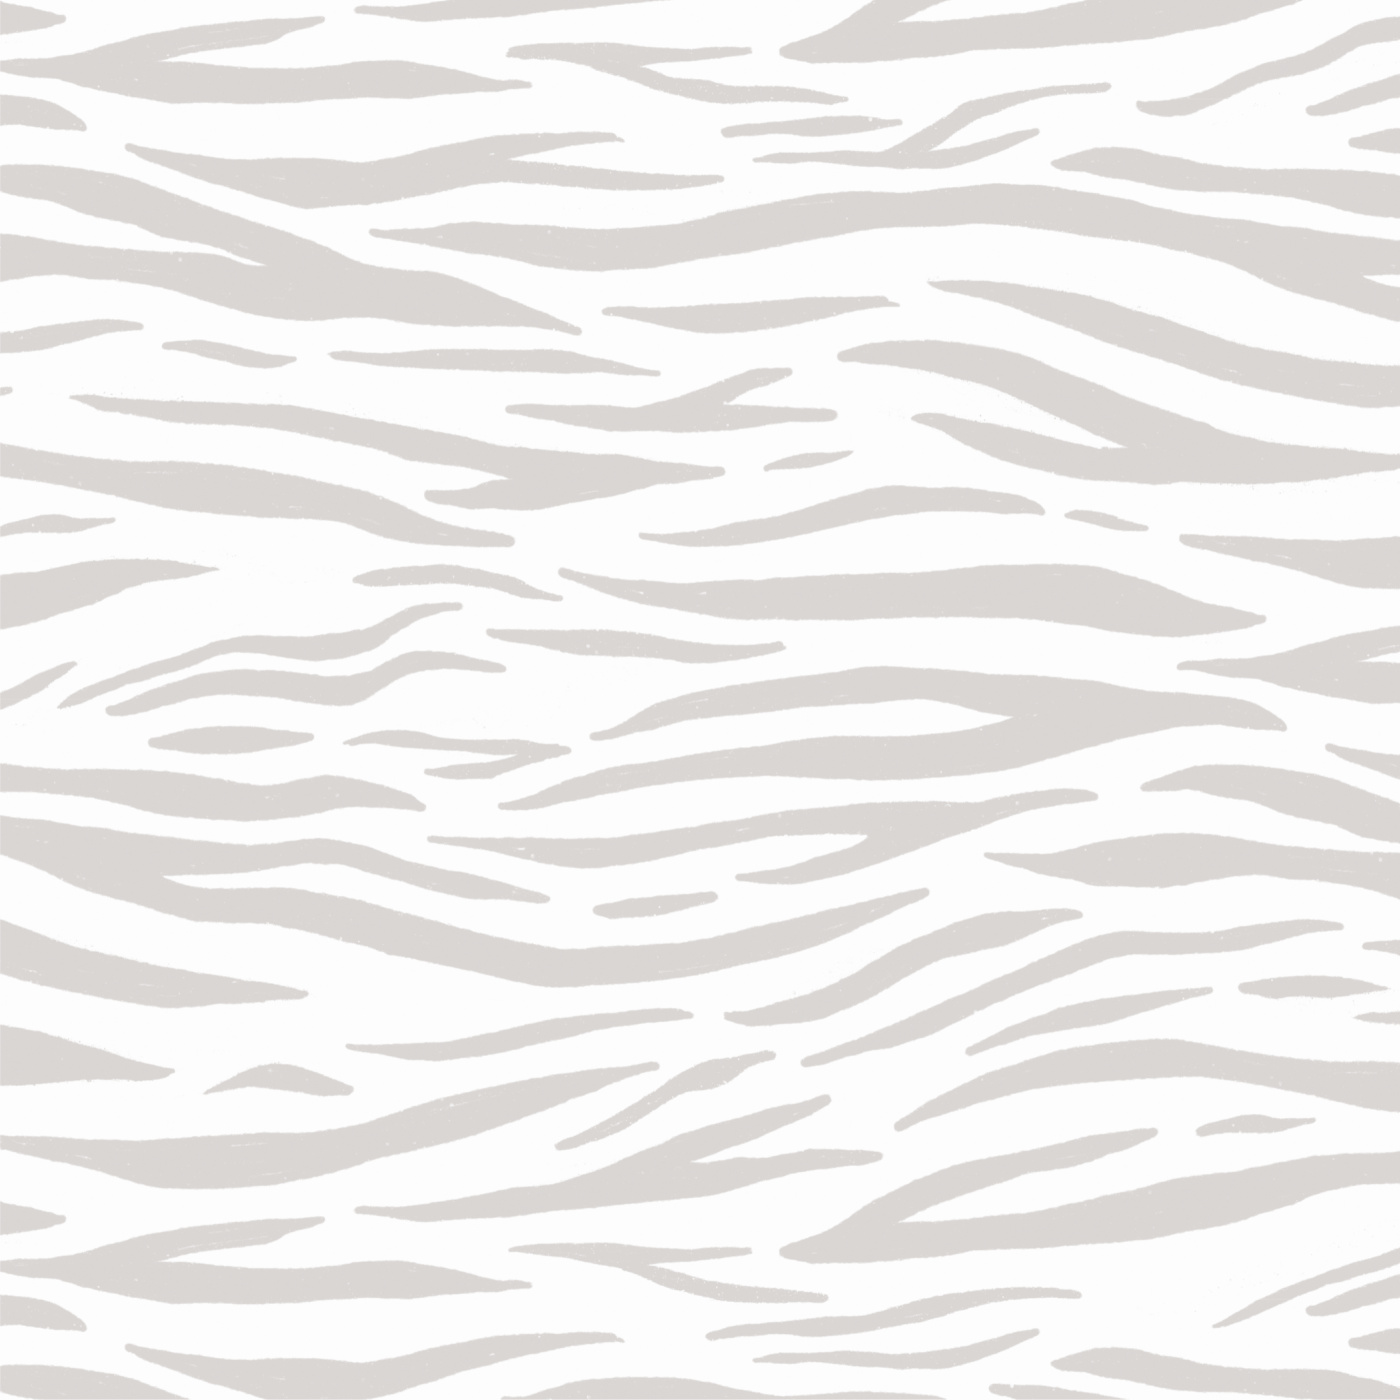 7 Best Zebra print wallpaper ideas  zebra print, animal print wallpaper,  print wallpaper